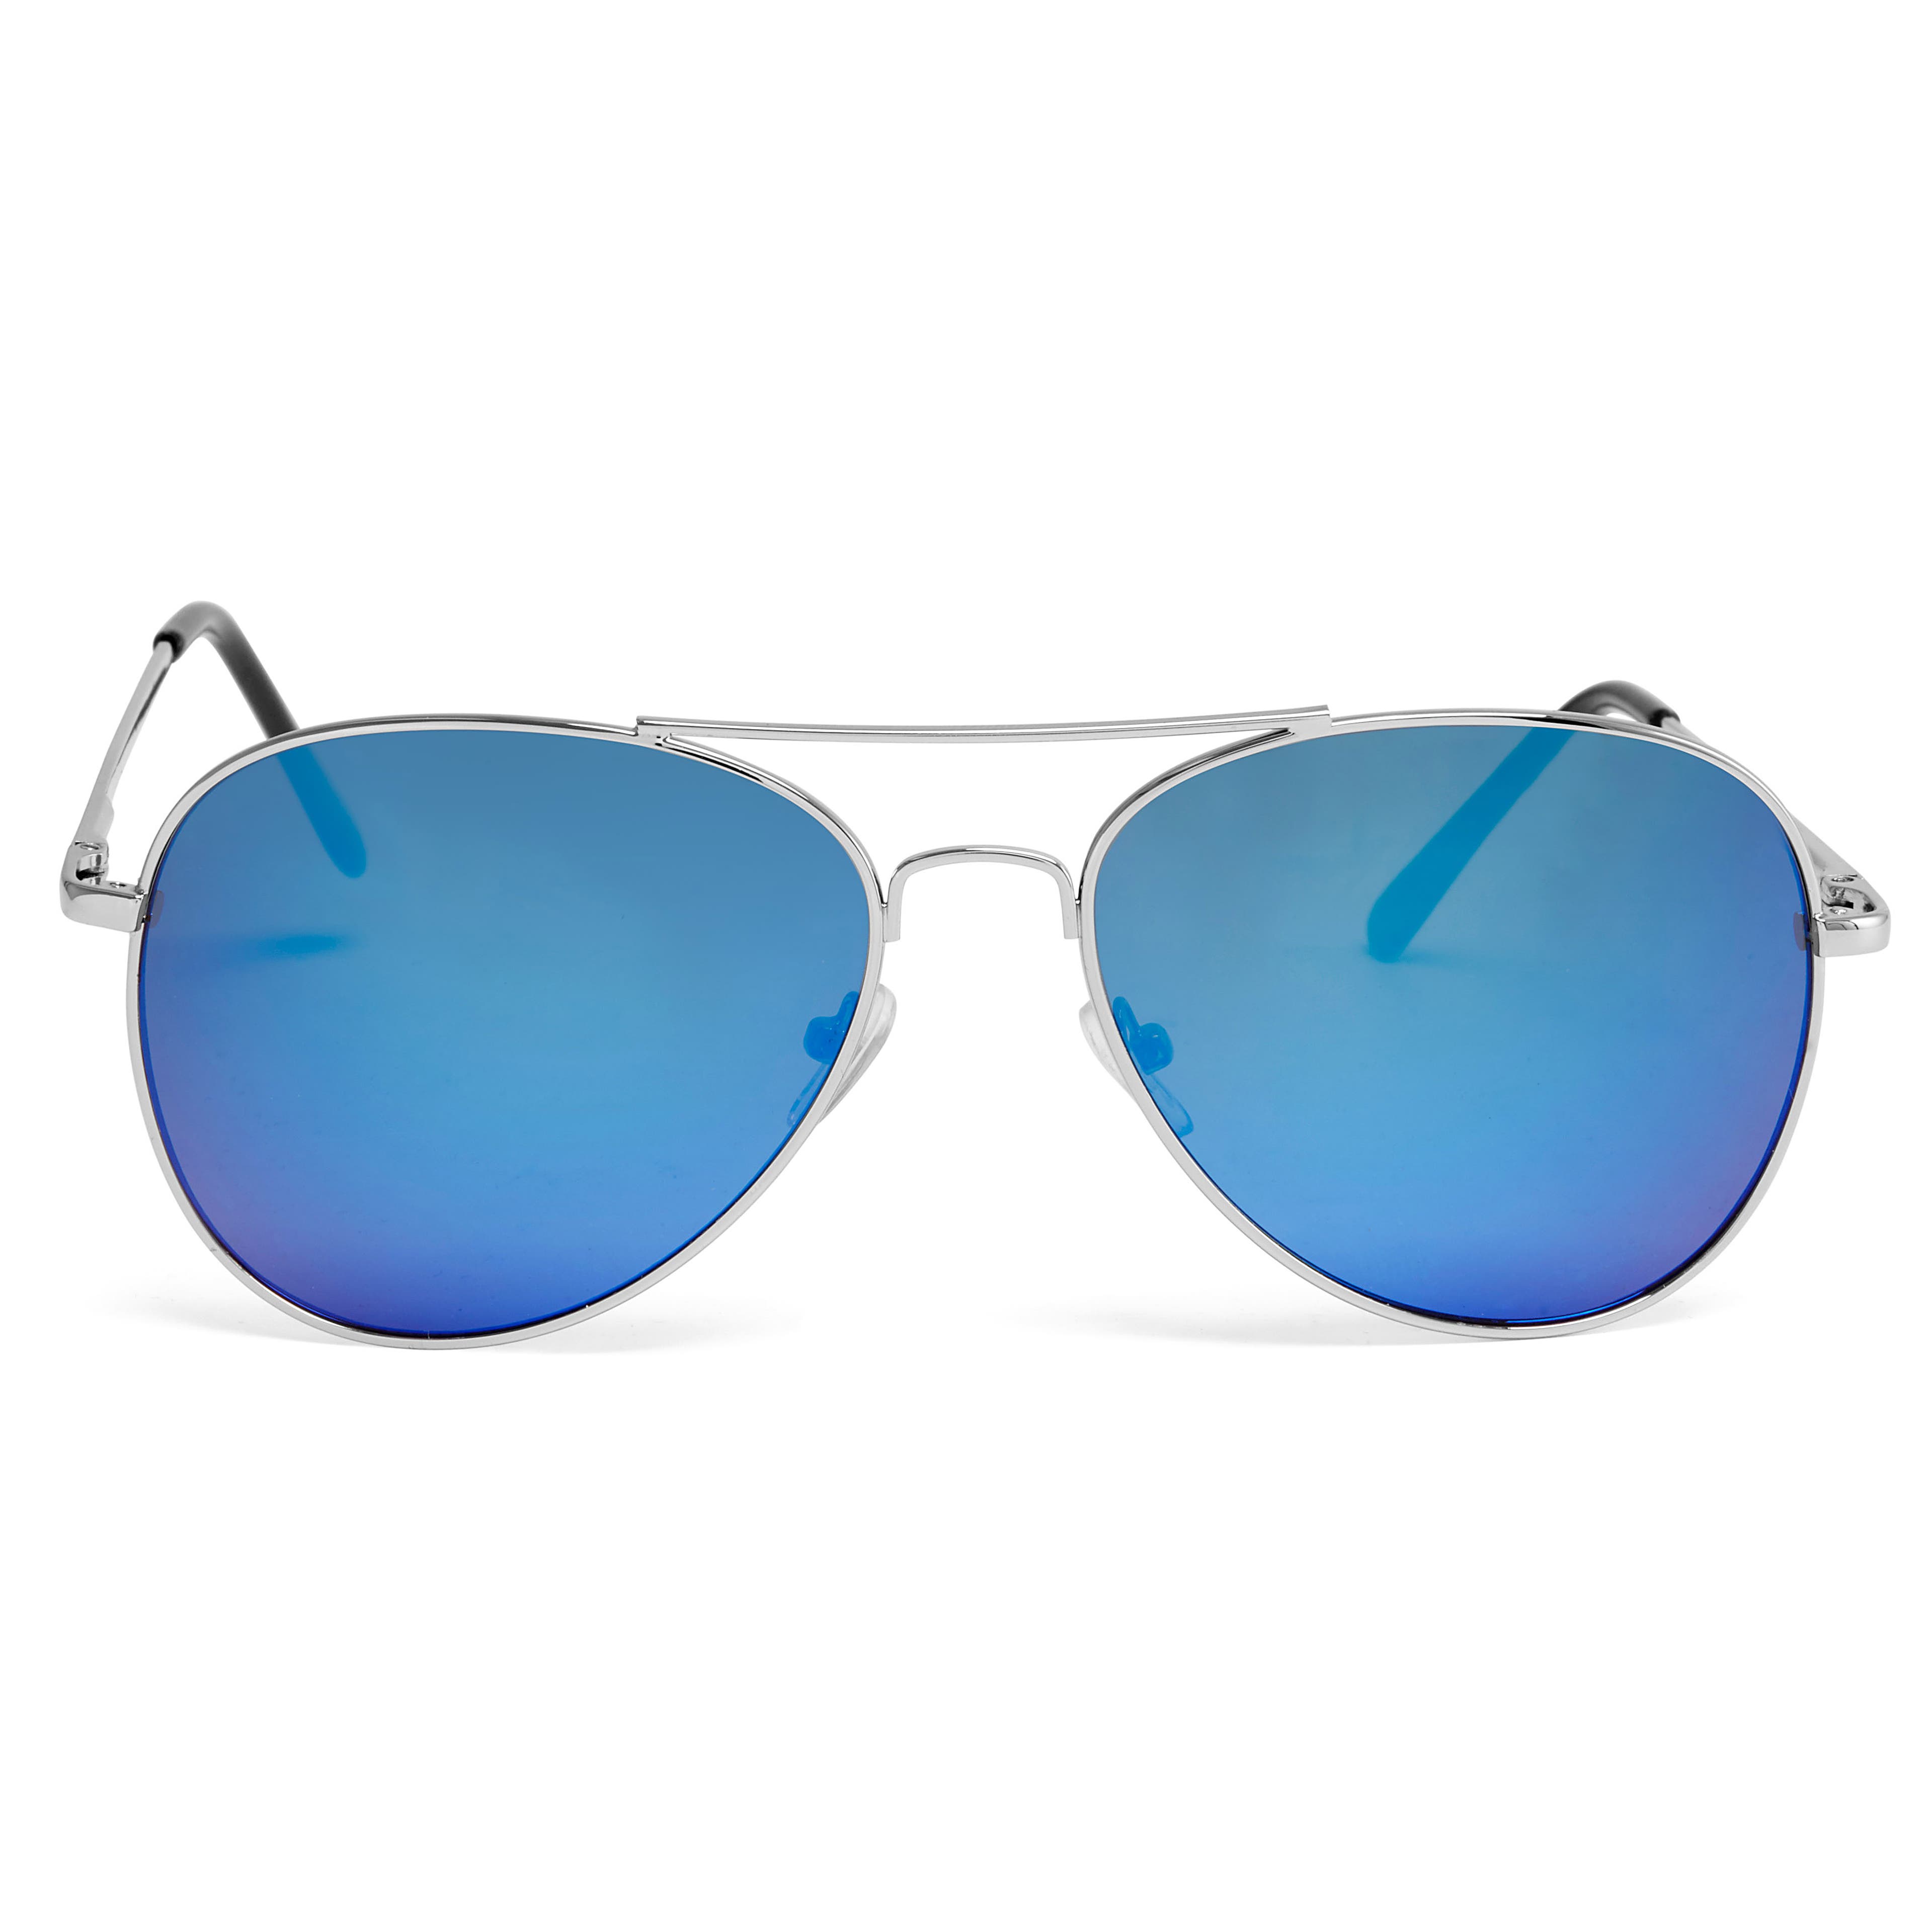 Silverfärgade & Blåa Speglande Pilotsolglasögon